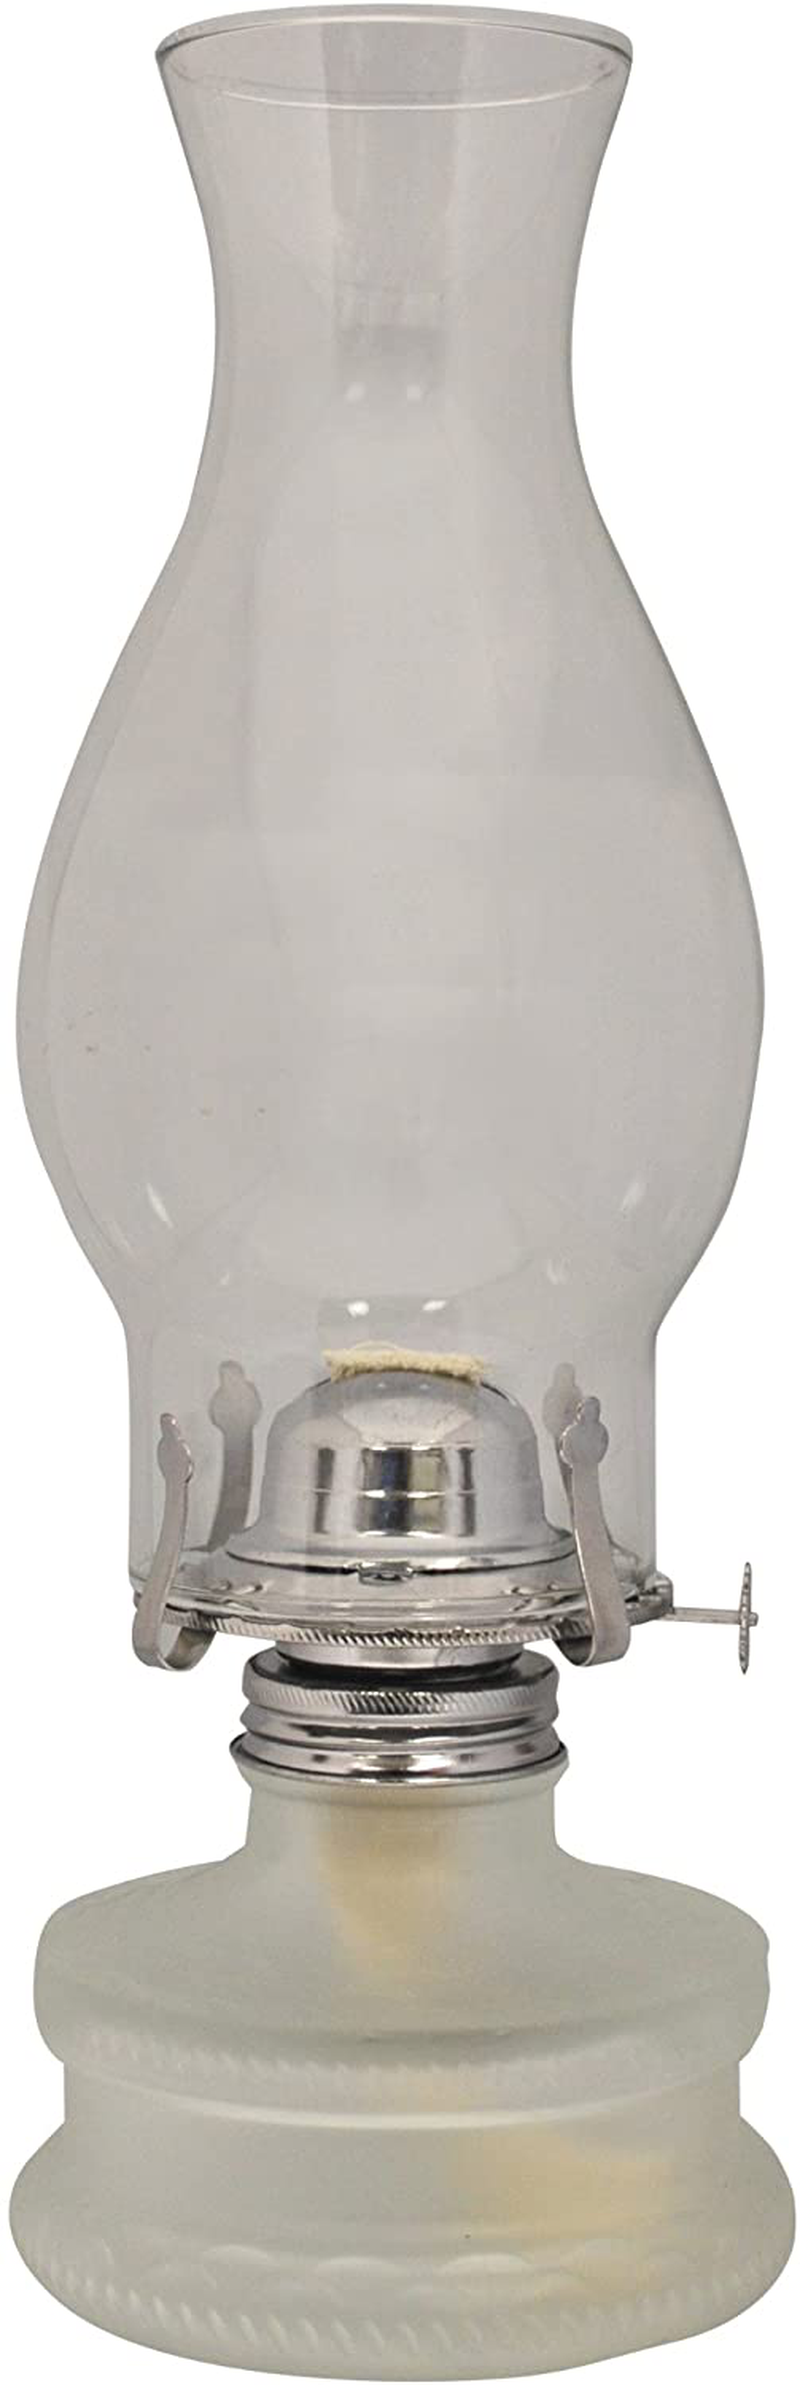 Lamplight Classic Oil Lamp